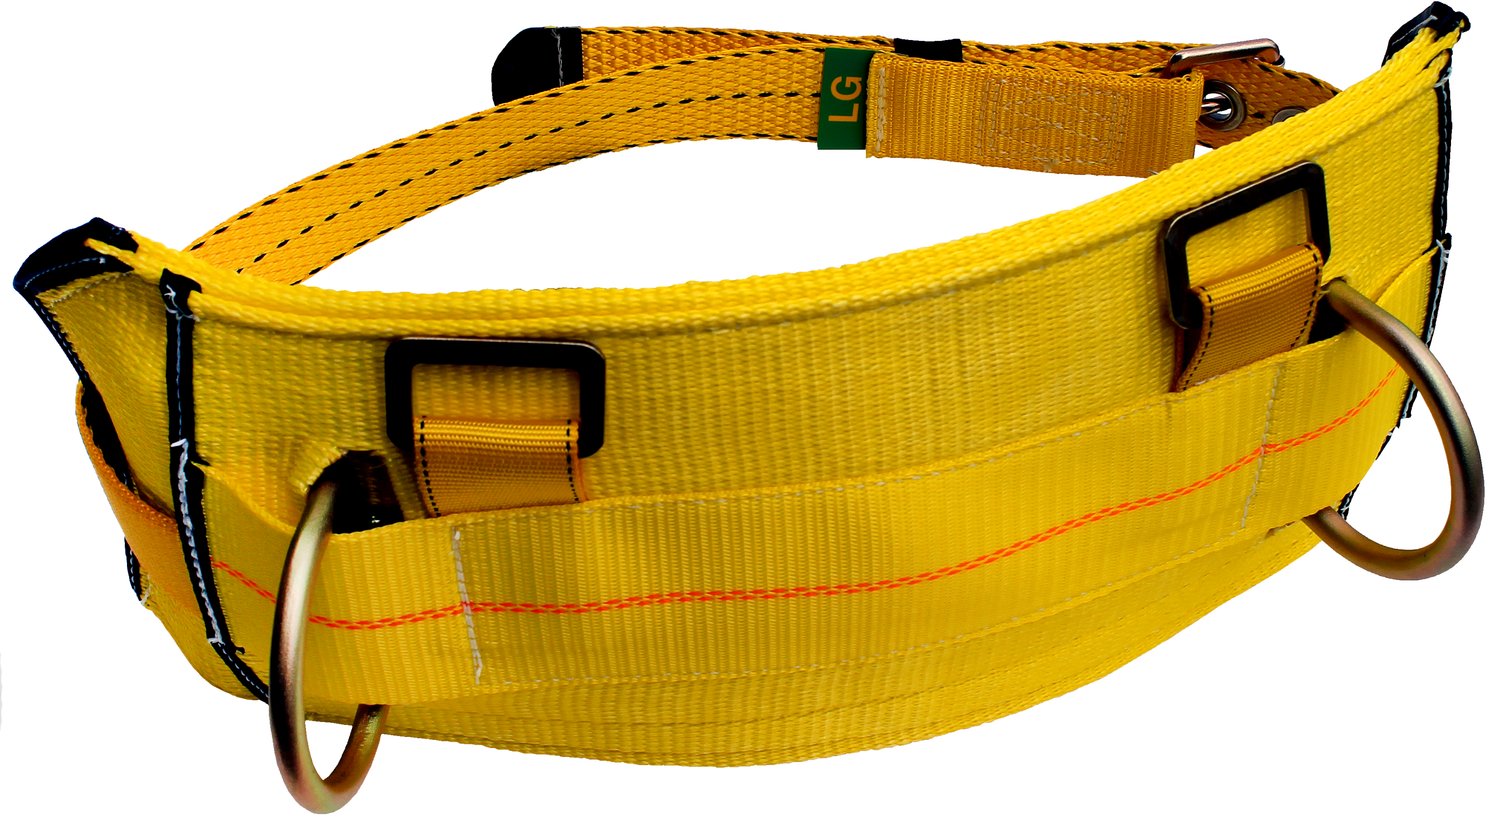 7012814983 - 3M DBI-SALA Derrick Tongue Buckle Positioning Belt with Pass-Thru Harness Connector 1000543, Yellow, Medium